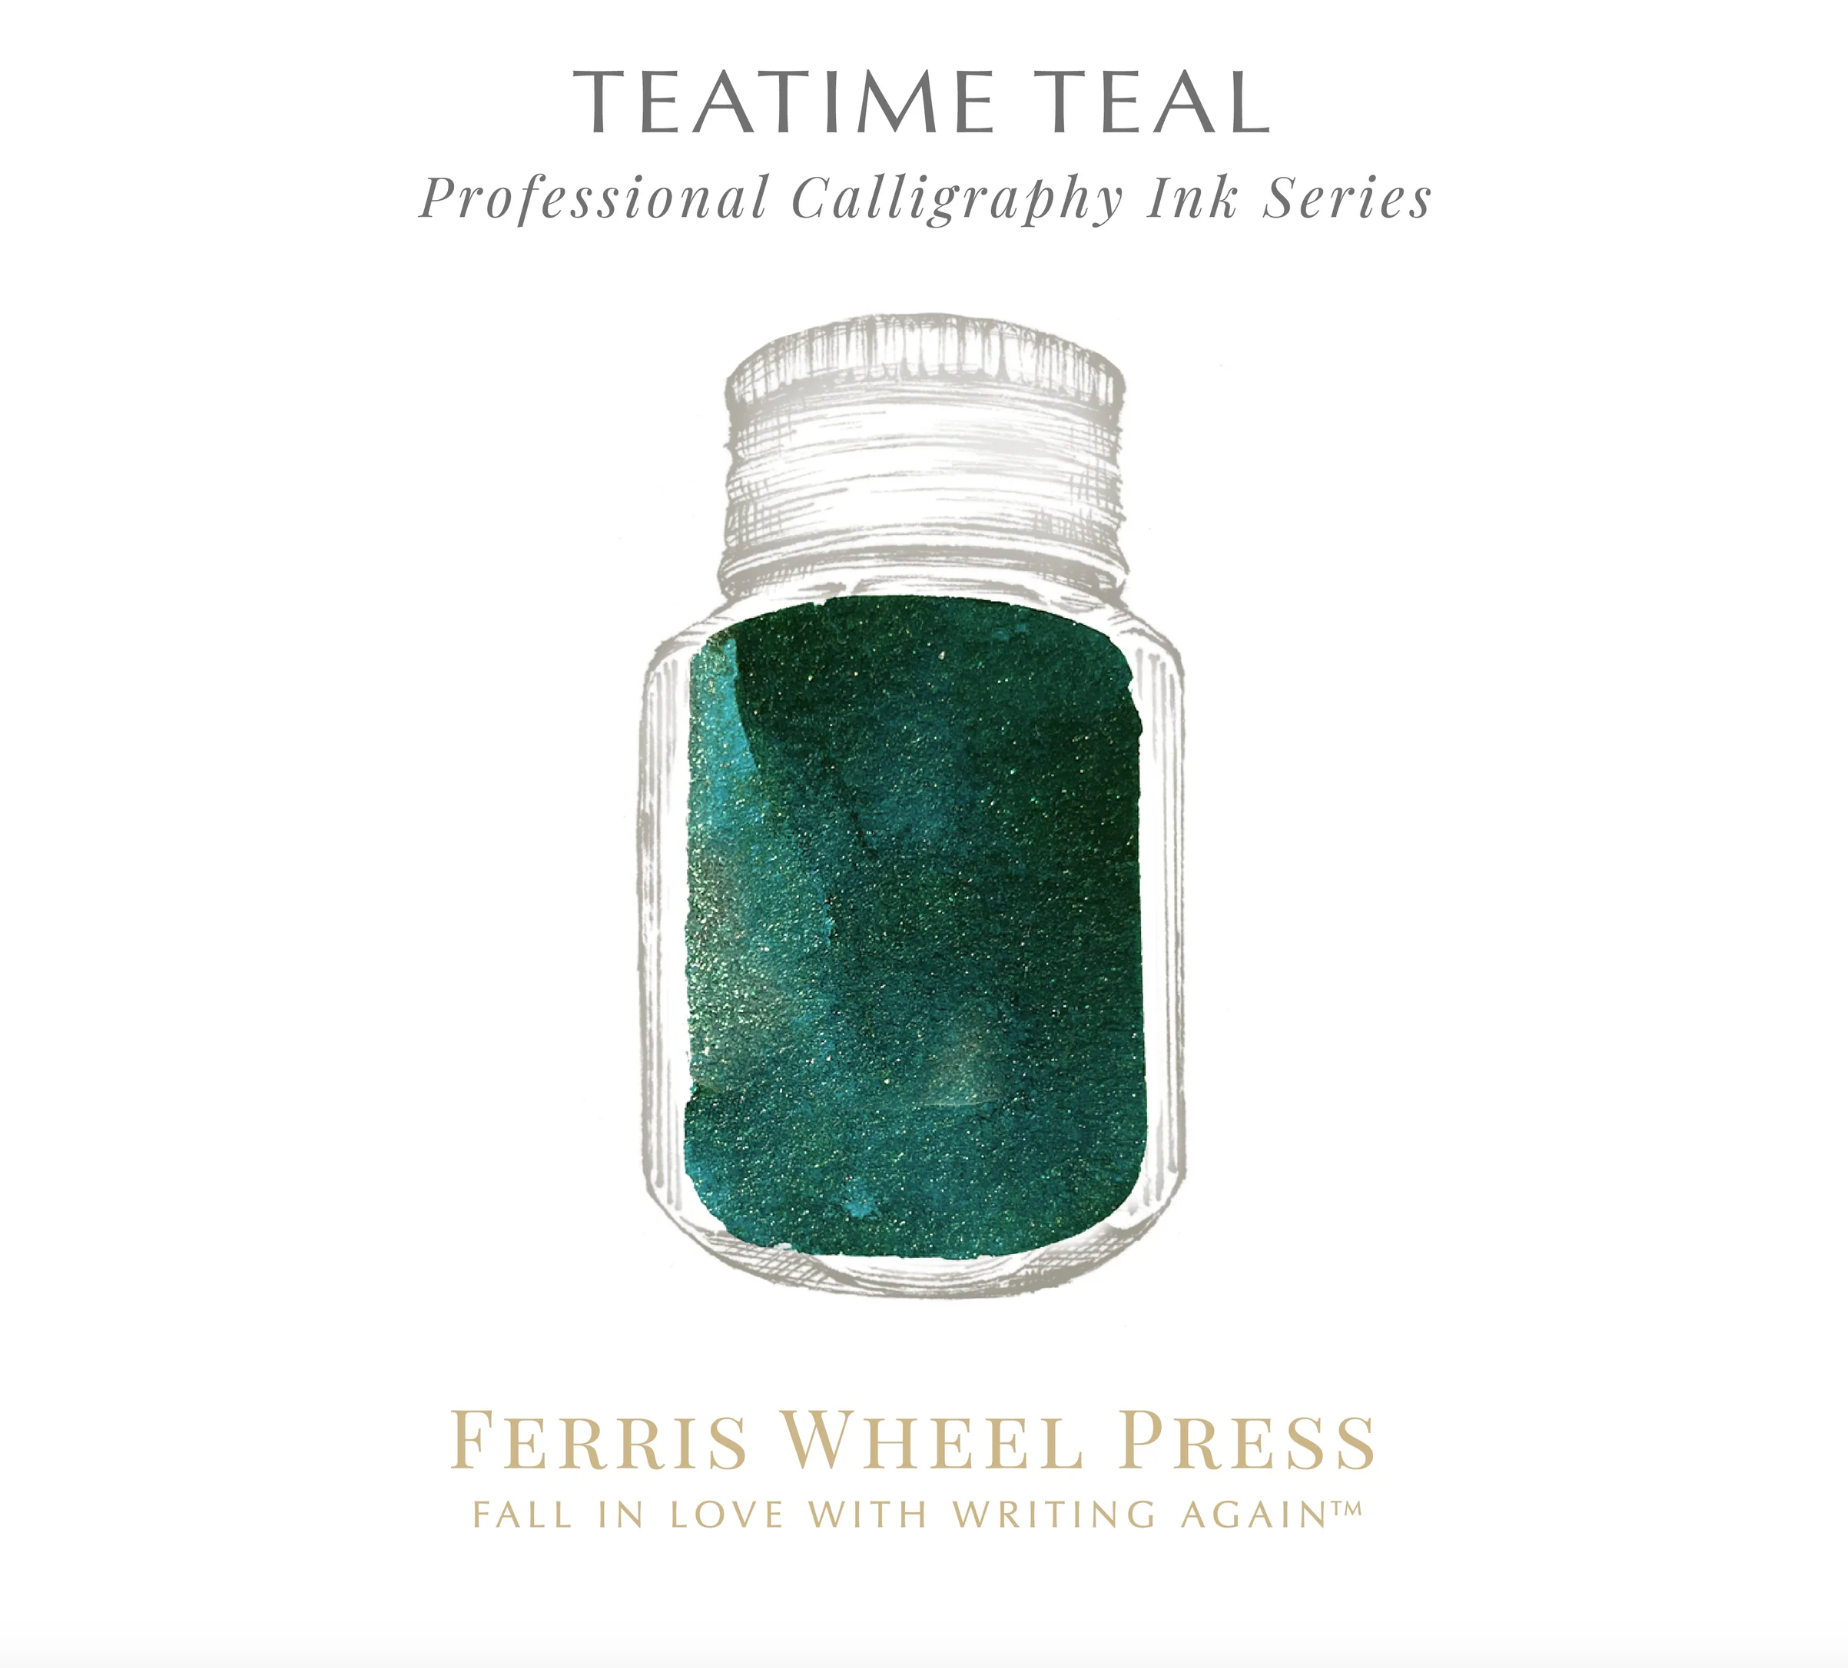 Ferris Wheel Press "Teatime Teal" 28ml Calligraphy Ink